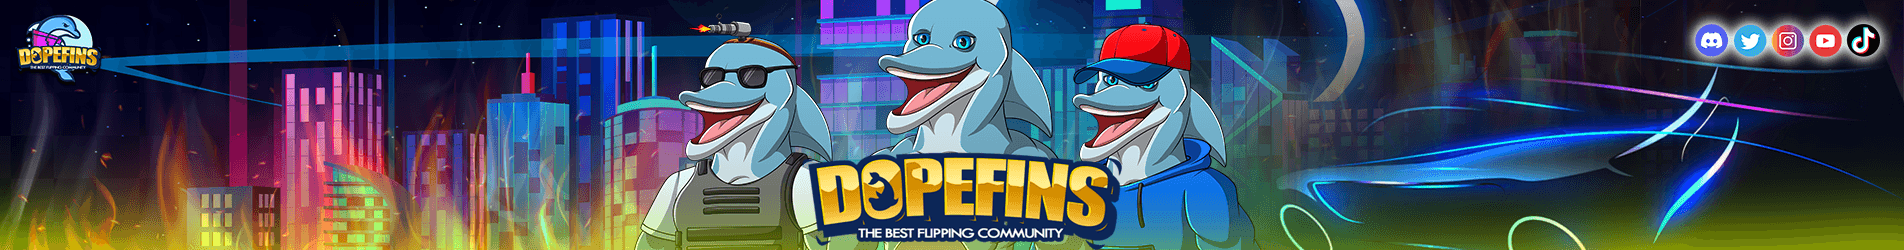 Dopefins 横幅